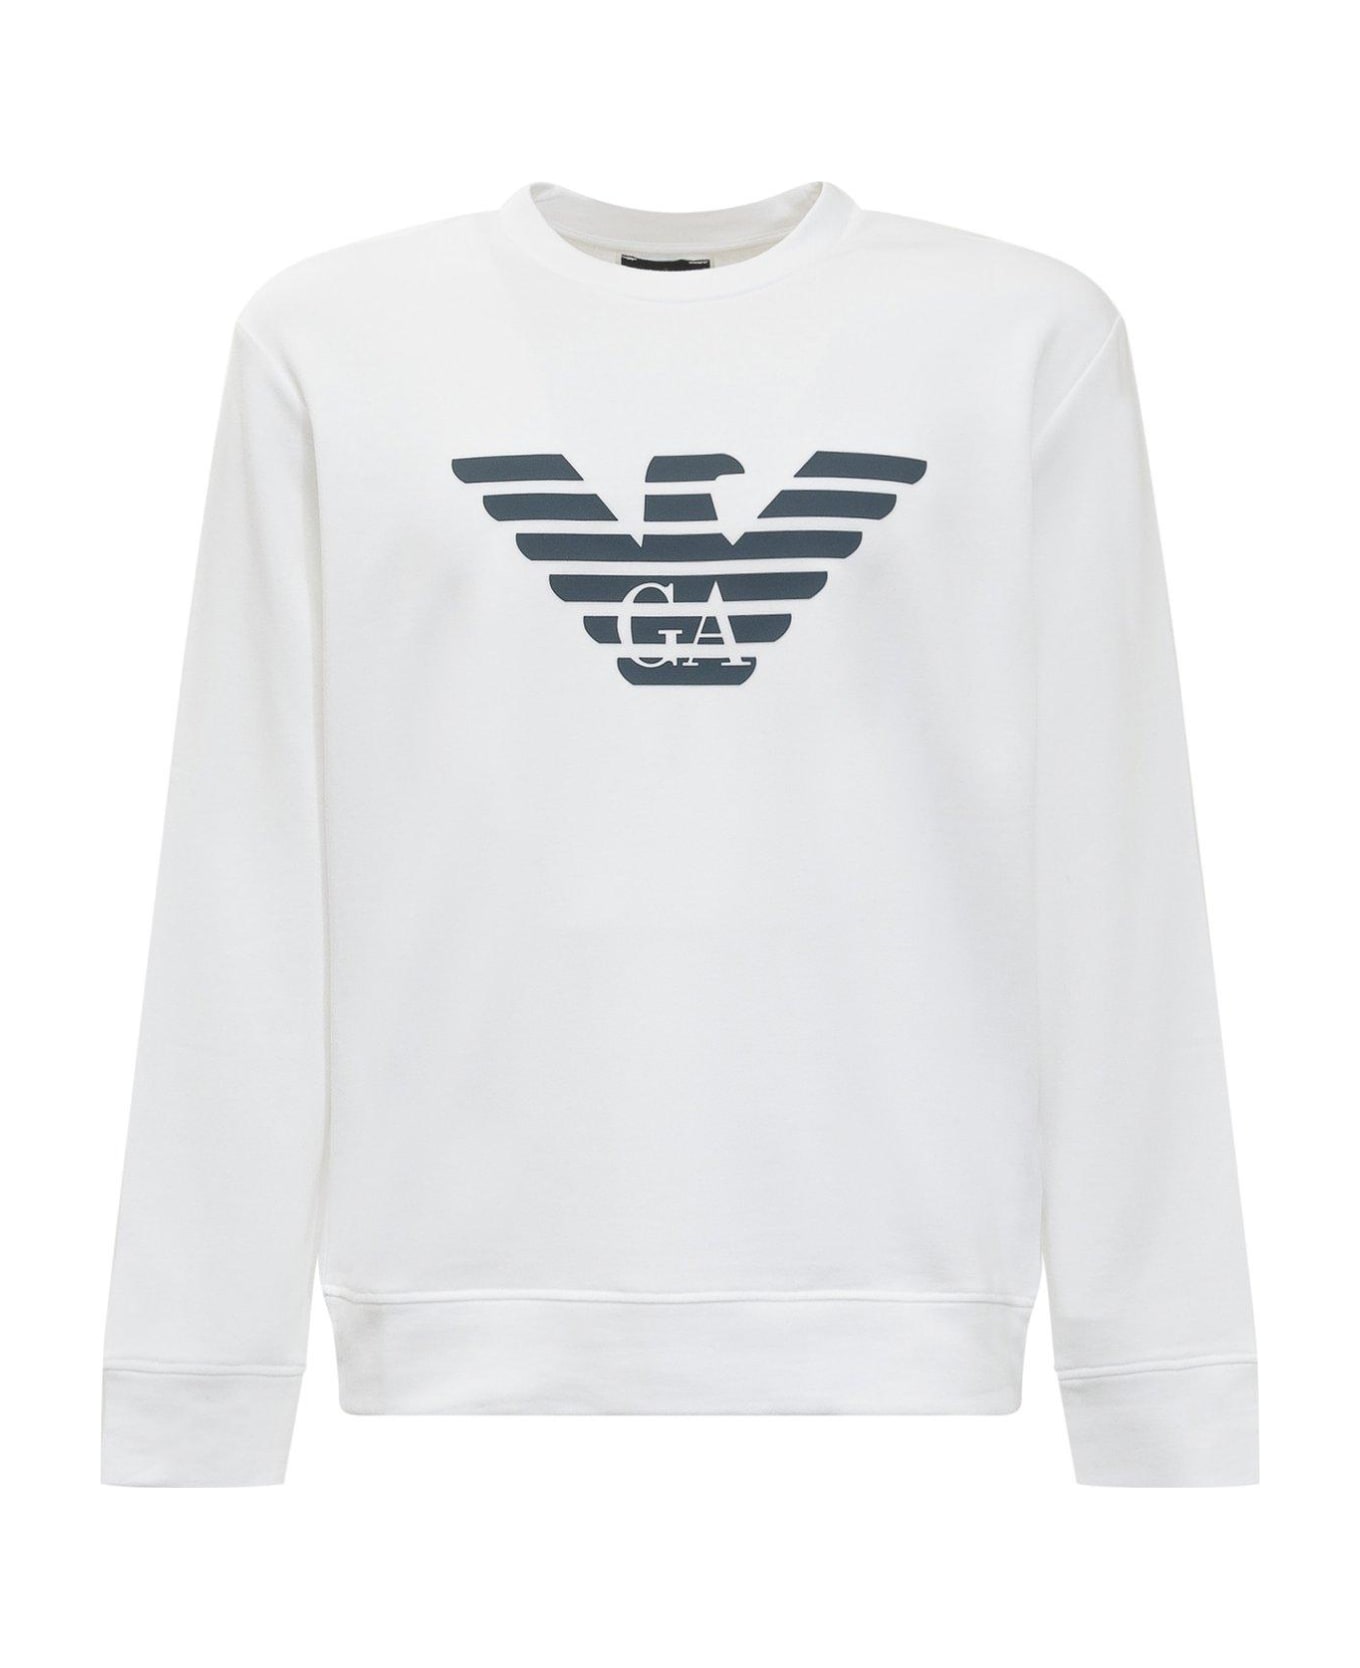 Emporio Armani Logo Print Long-sleeved Sweatshirt - WHITE フリース